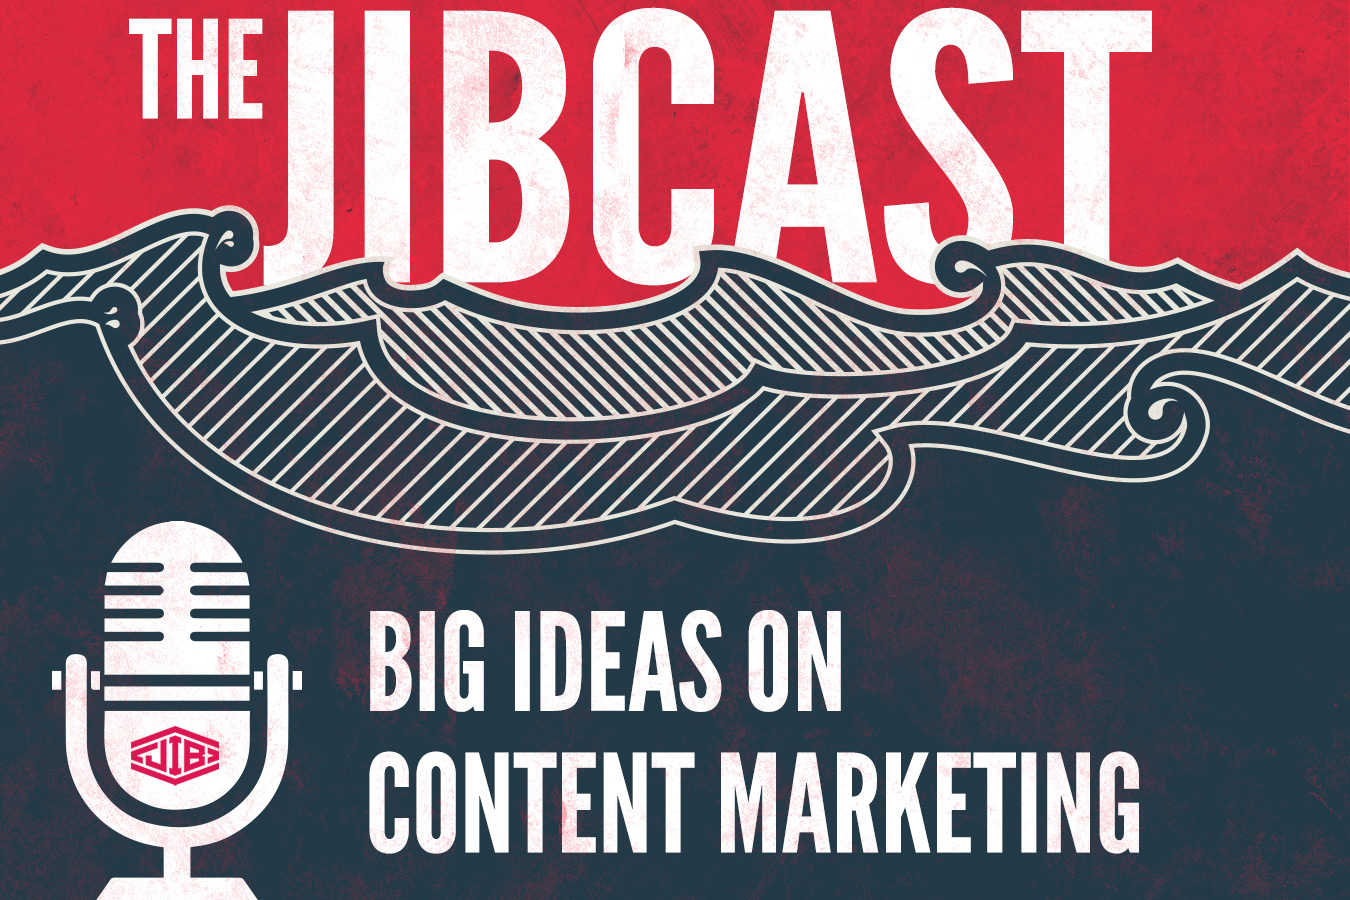 jibcast Episode 2 – Repurposing Your Content into A Book